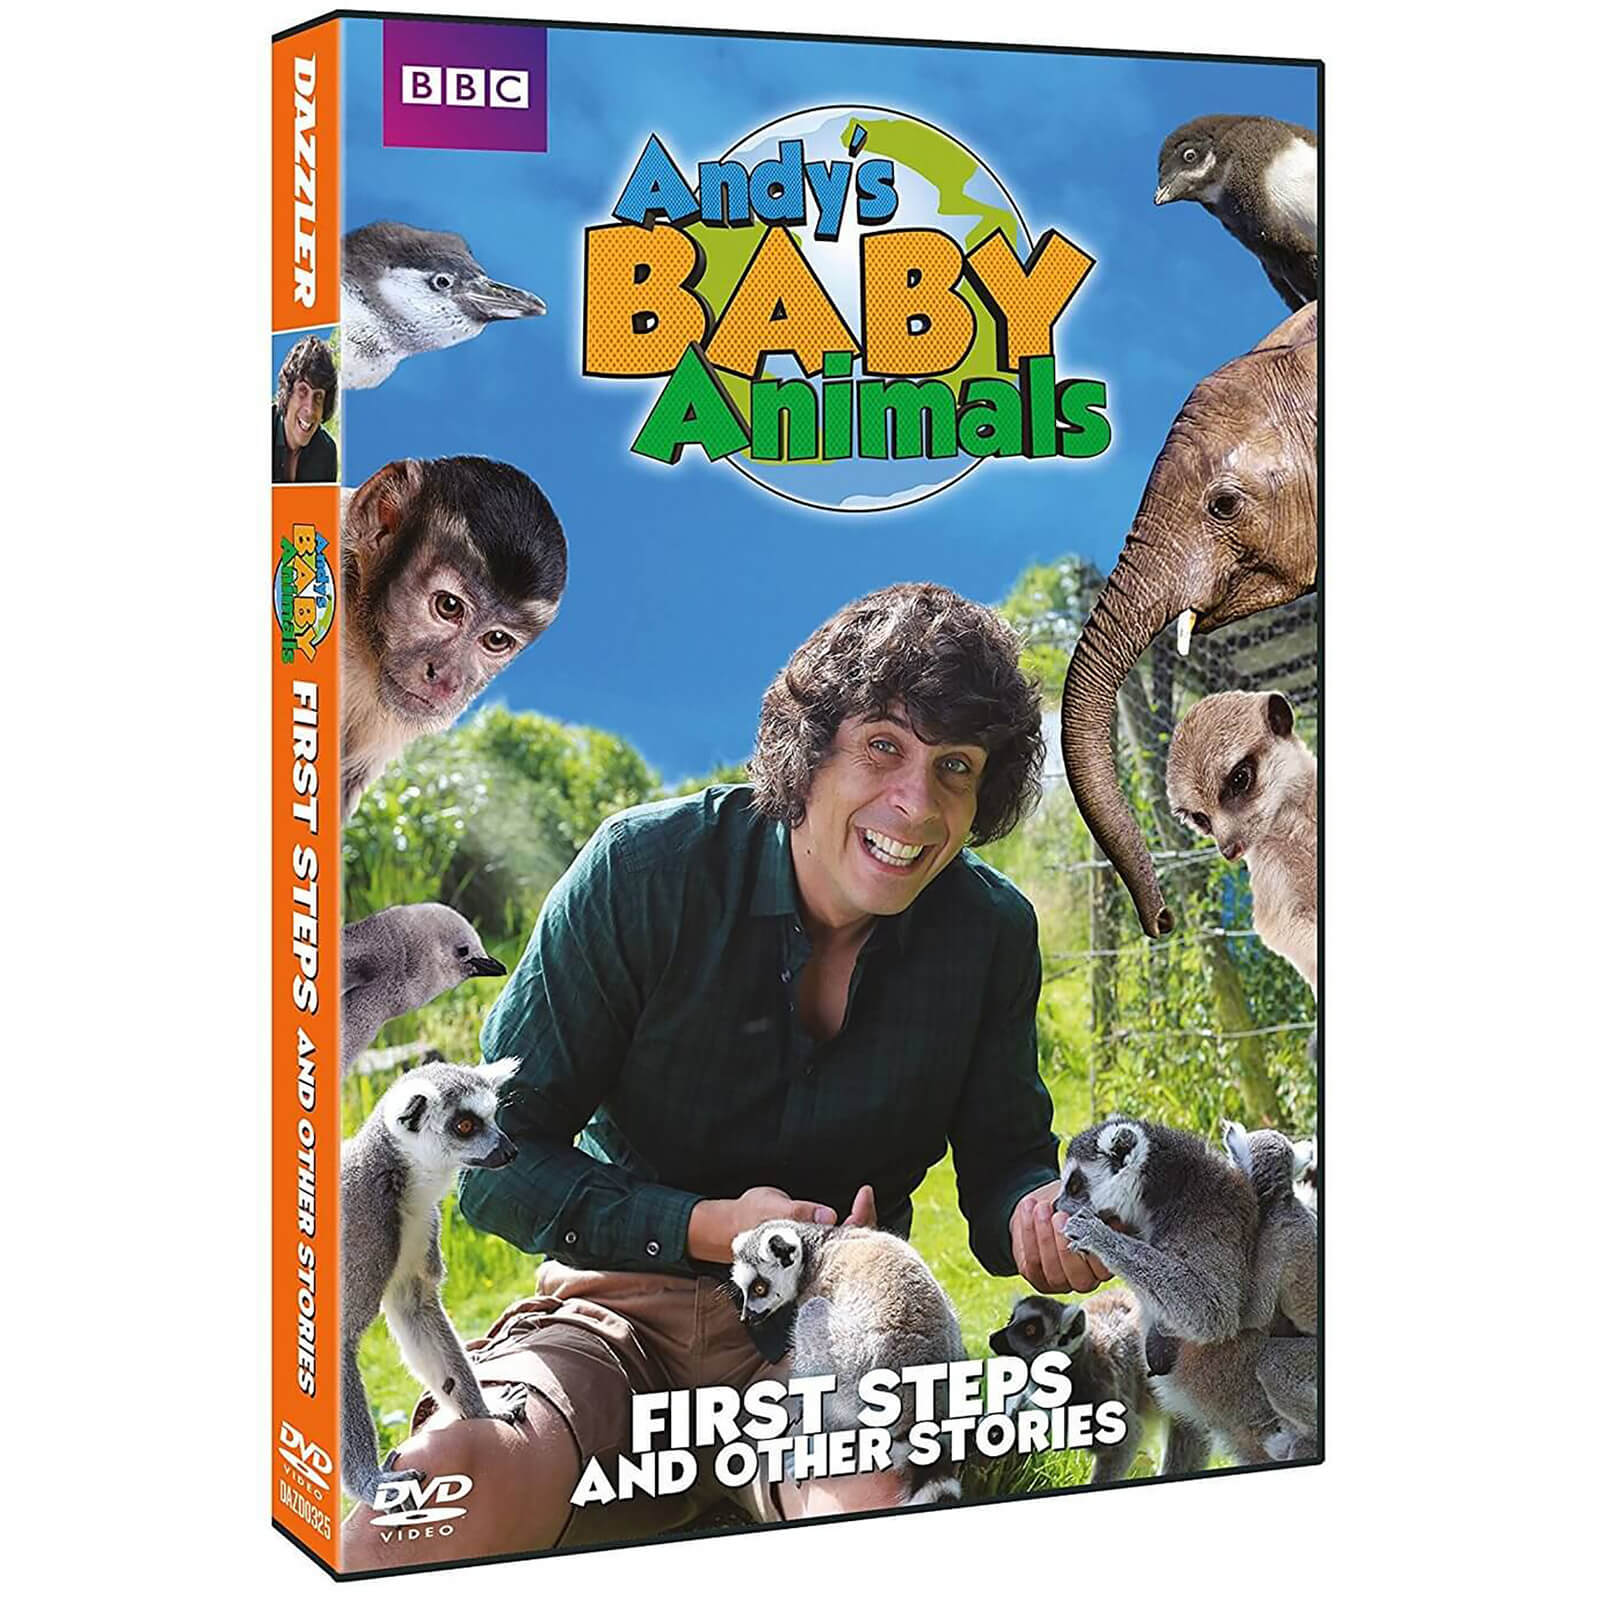 spirit entertainment andys baby animals (bbc) - complete series